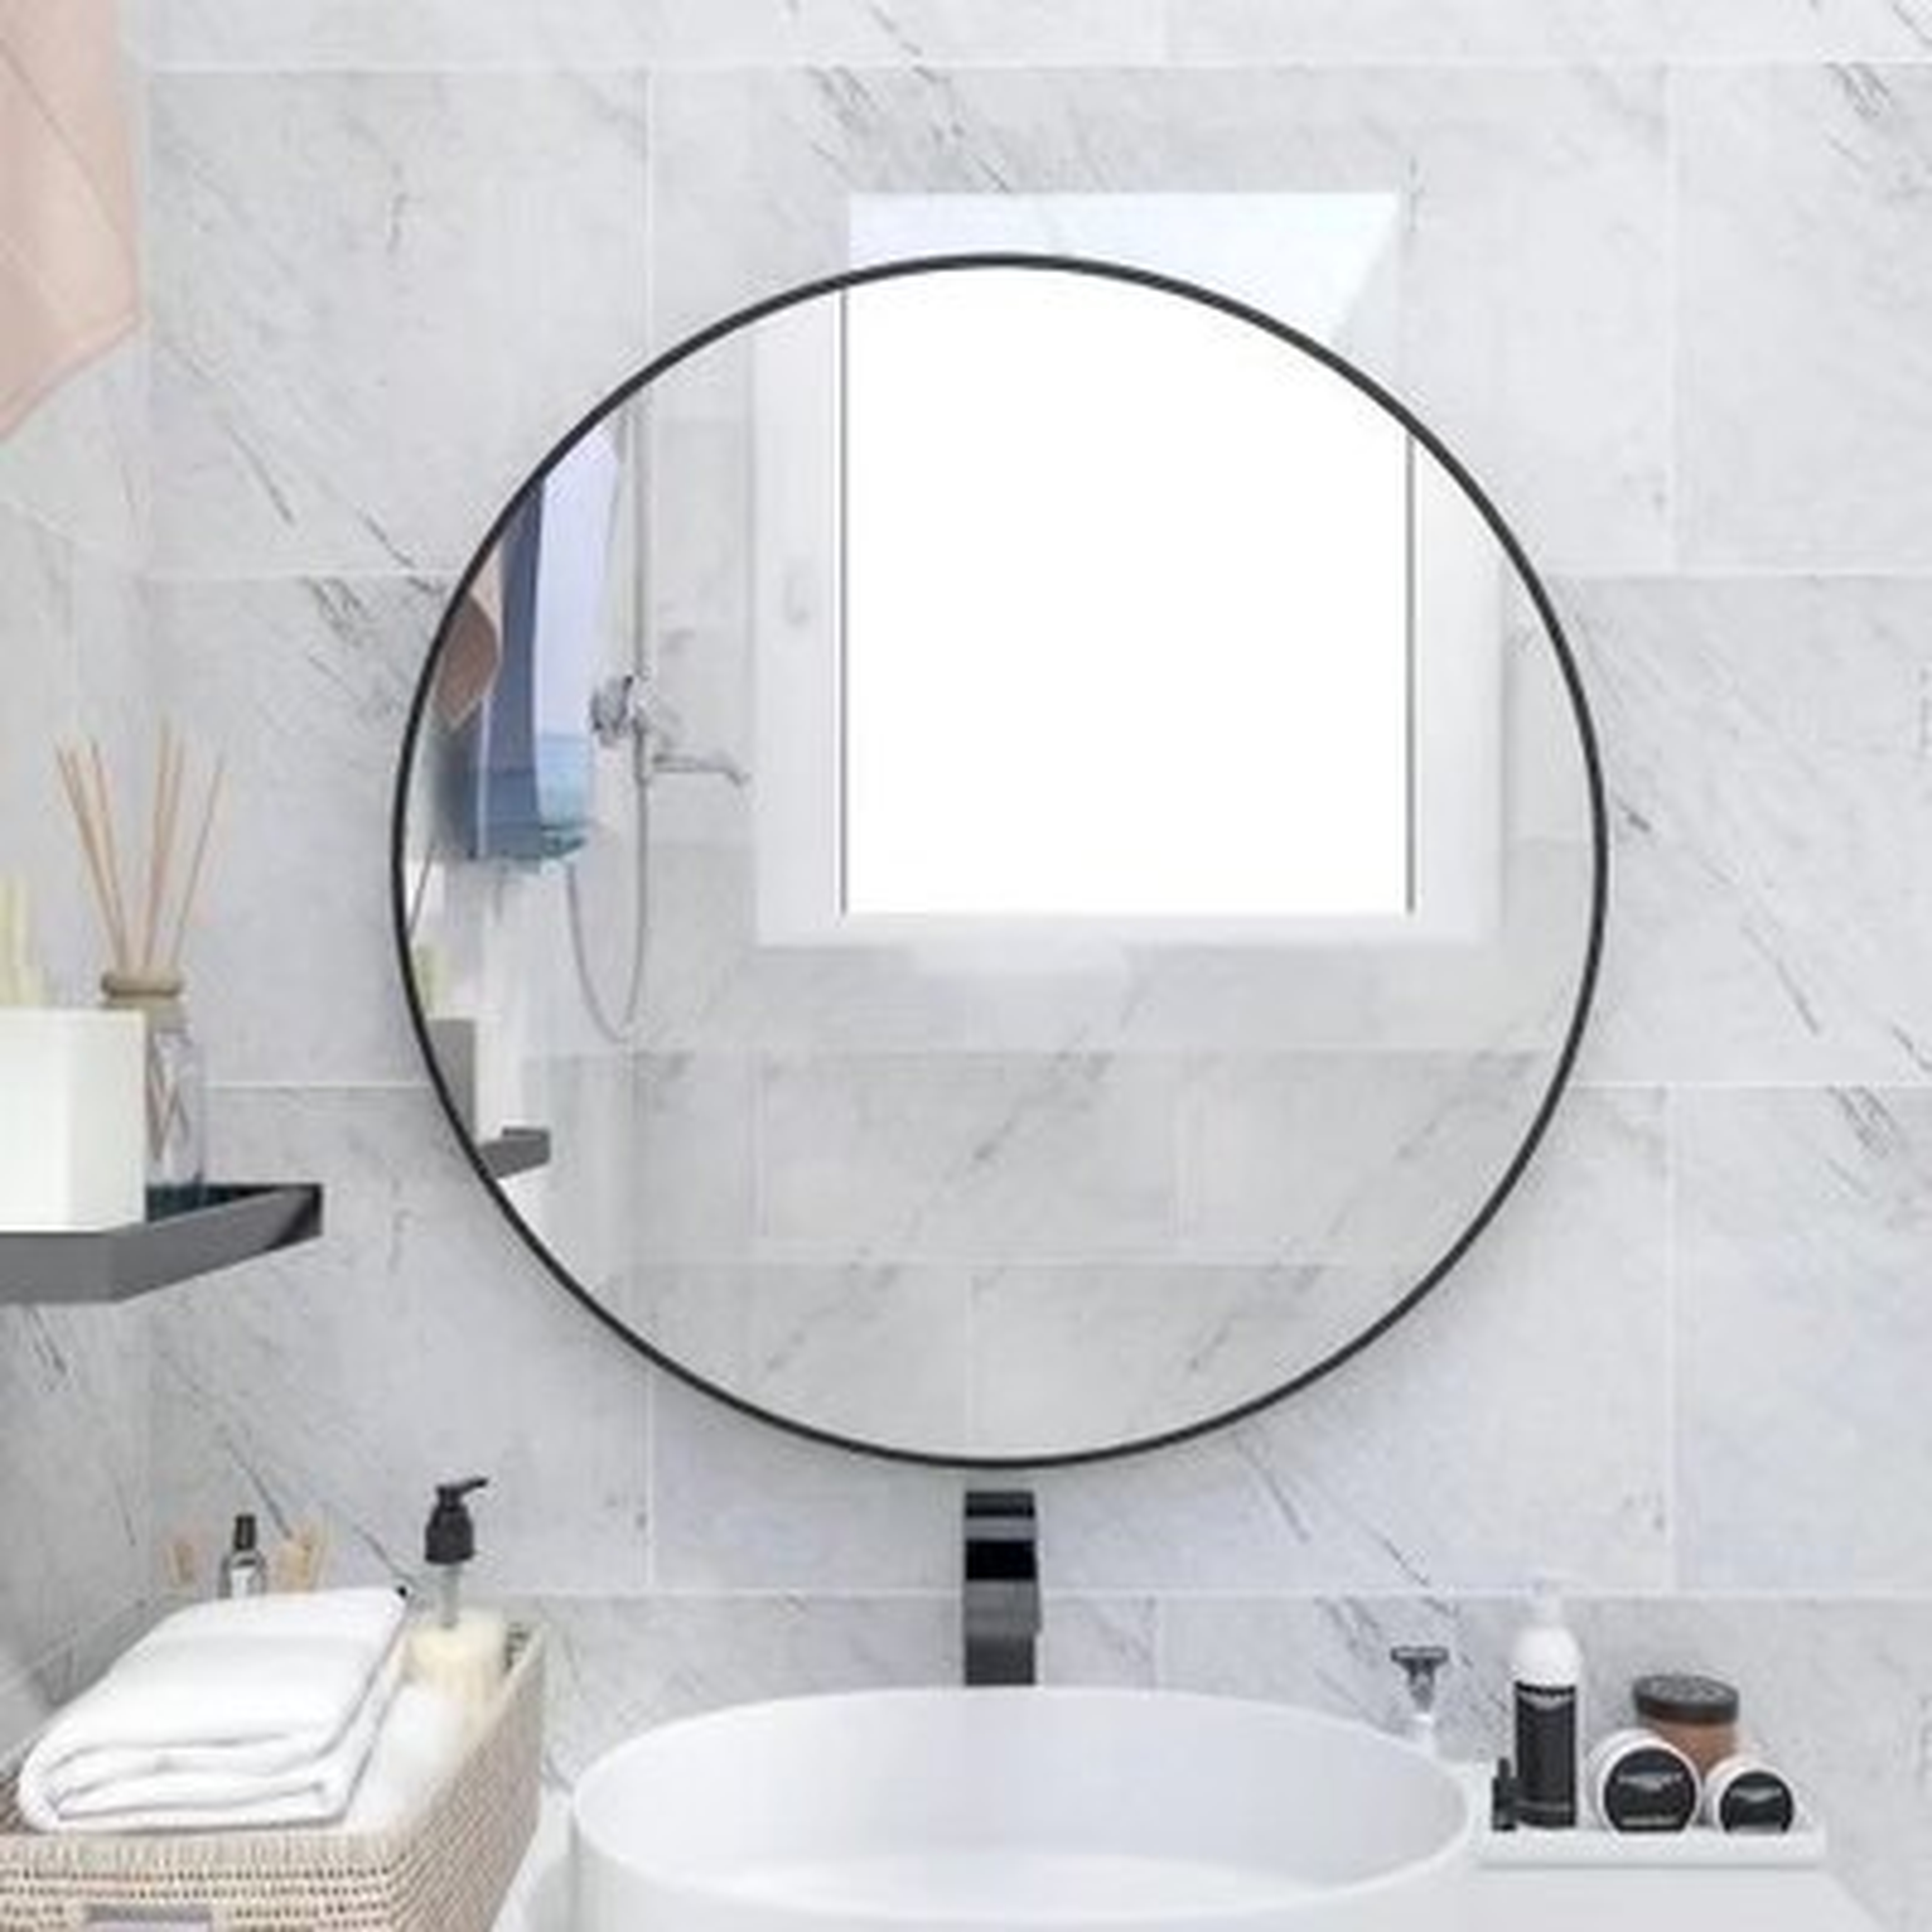 24" Wall Circle Mirror Large Round Black Mirror Farmhouse Circular Mirror Bathroom Mirror - Wayfair